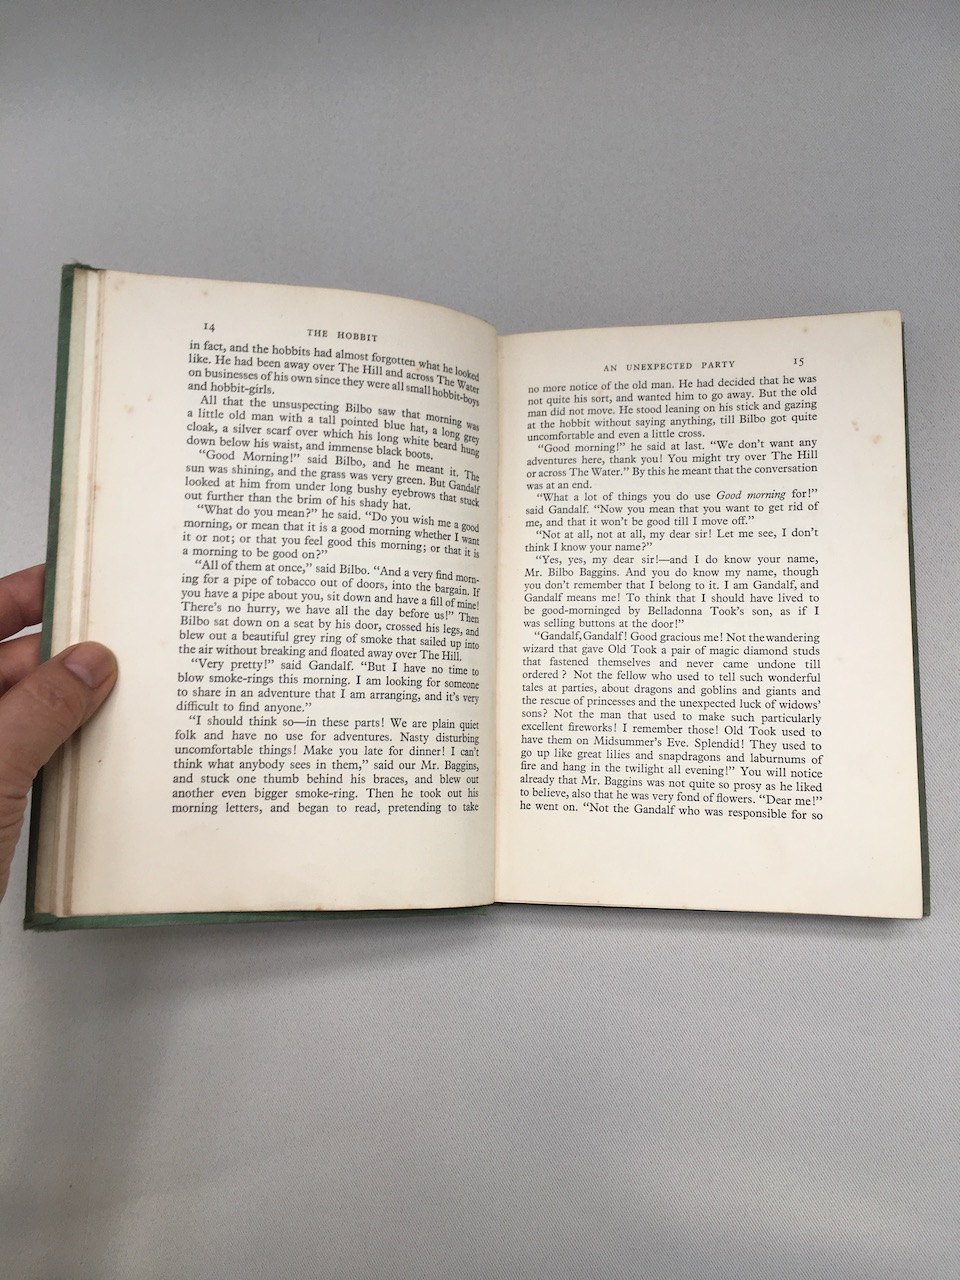 
The Hobbit, George Allen & Unwin, 1937 1st UK Edition 2nd impression 19